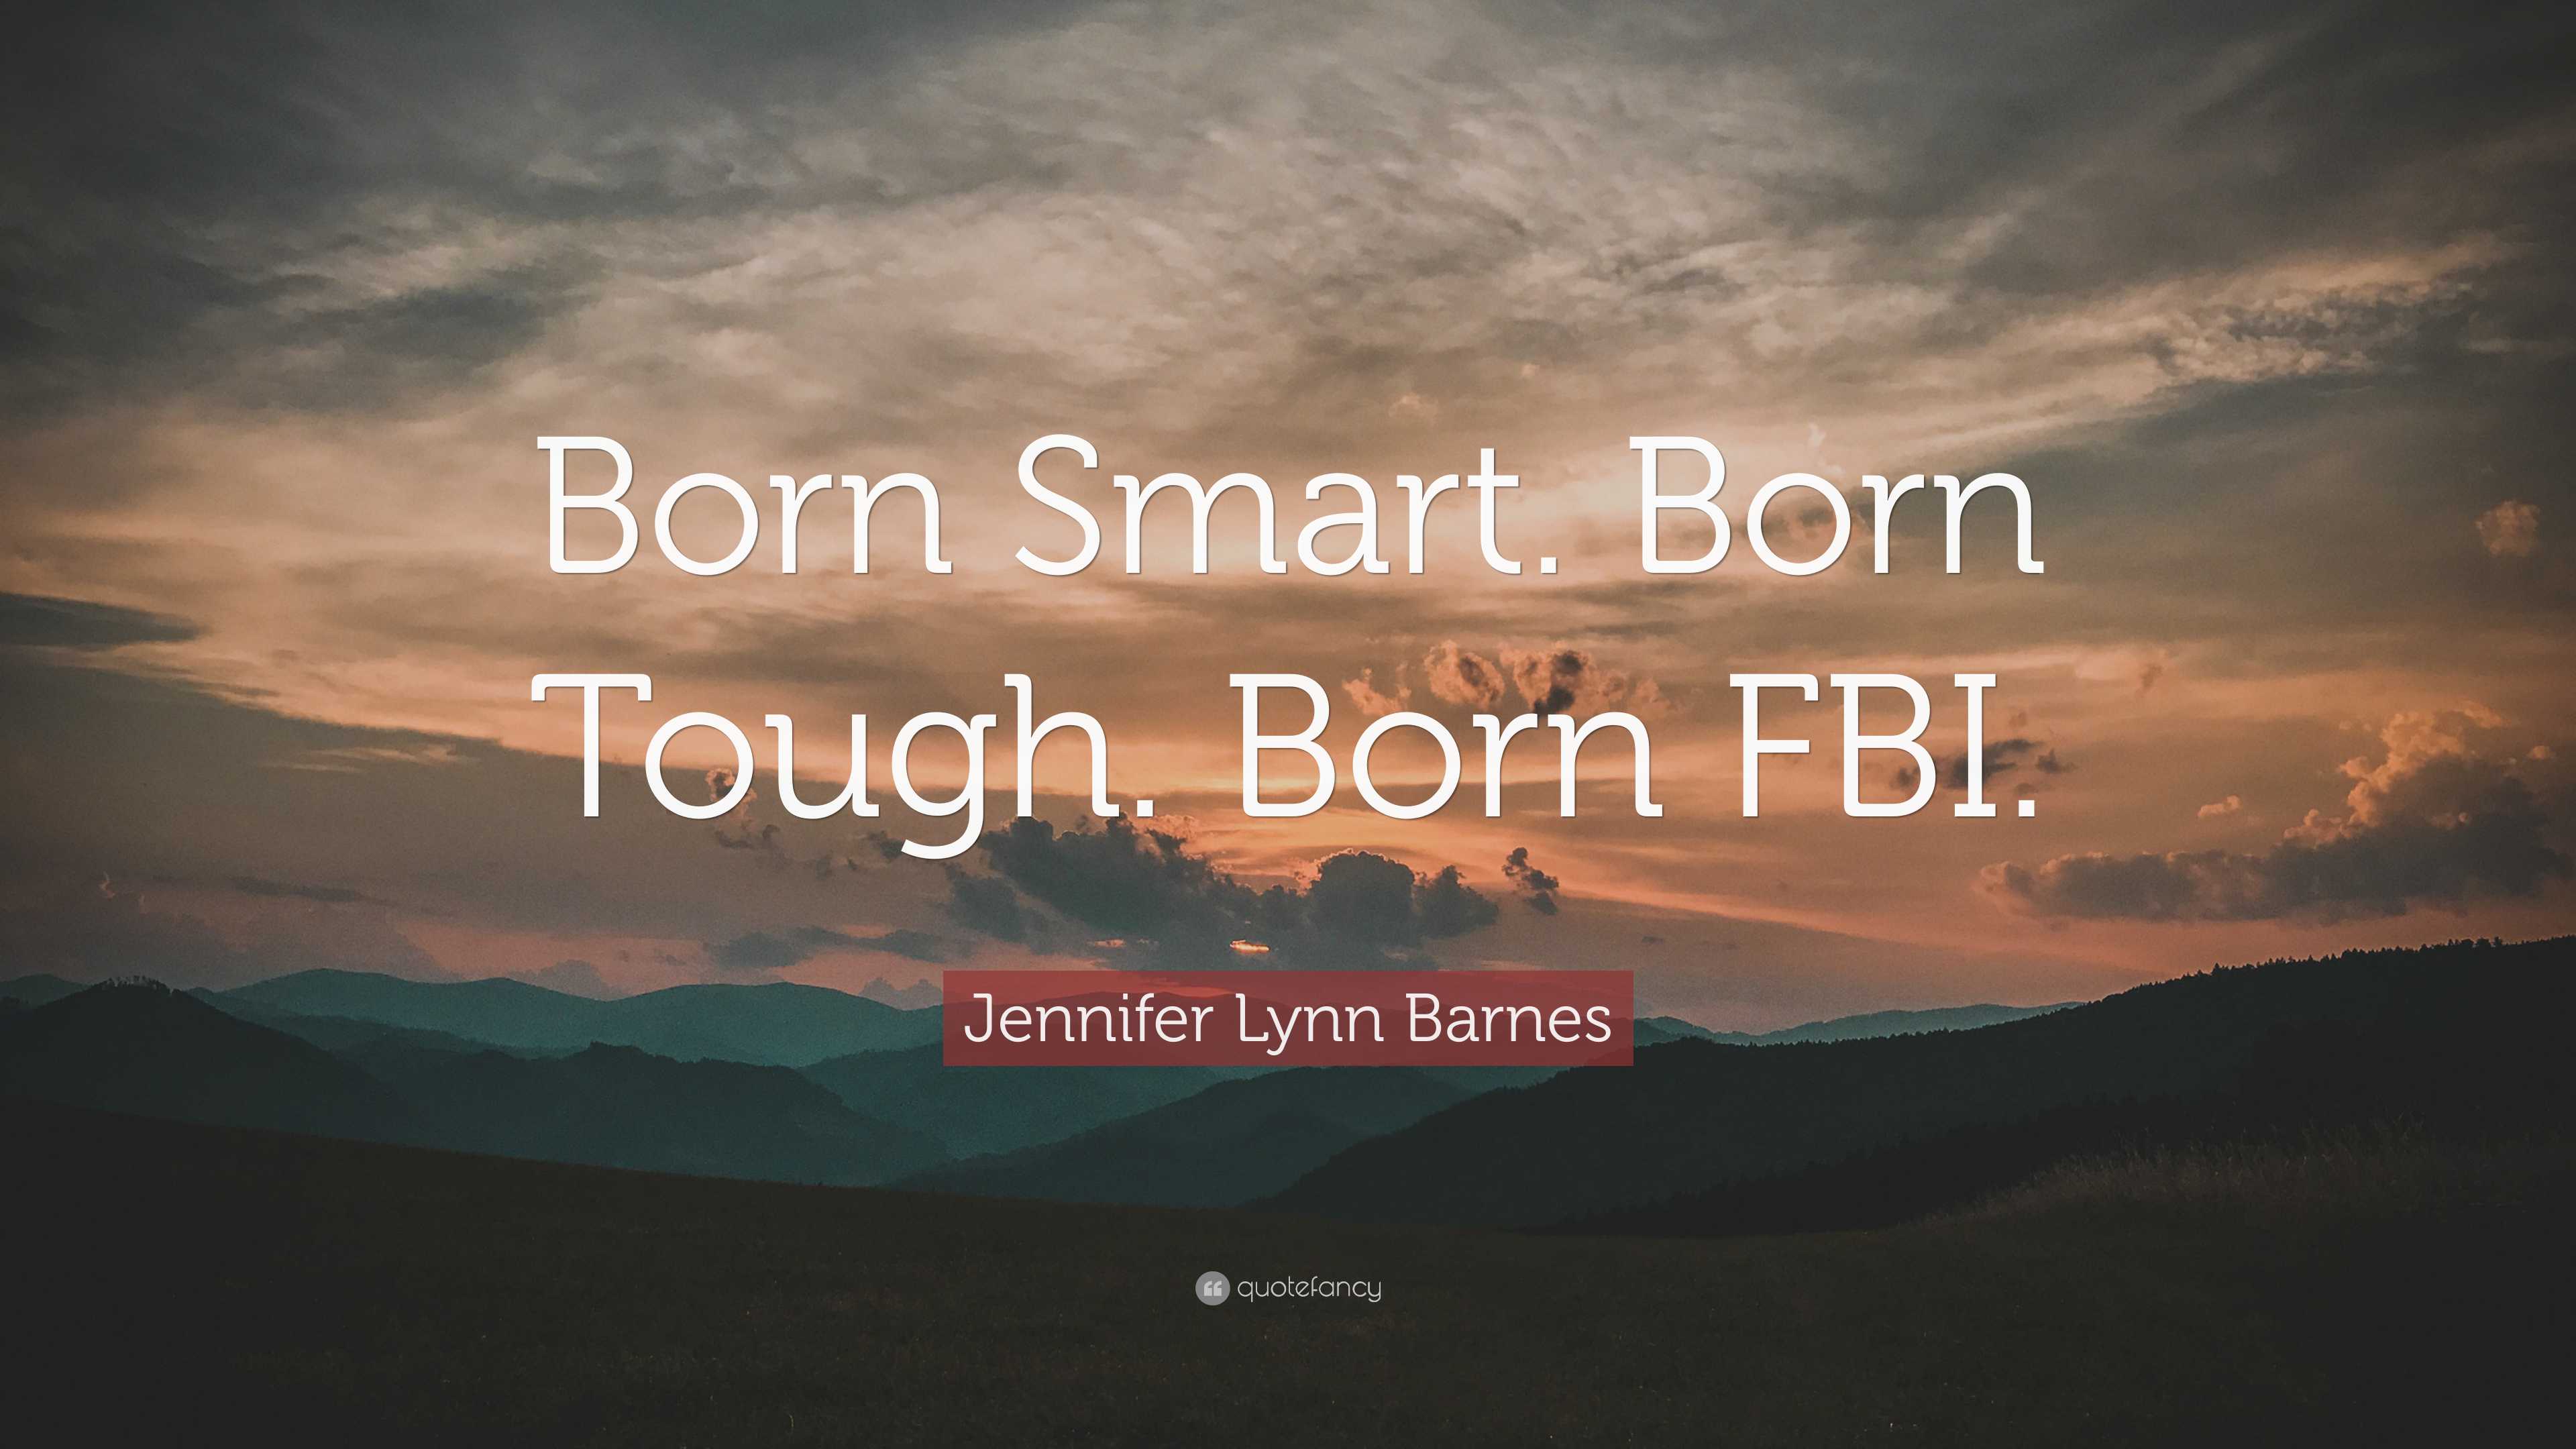 Jennifer Lynn Barnes Quote: “Born Smart. Born Tough. Born FBI.”